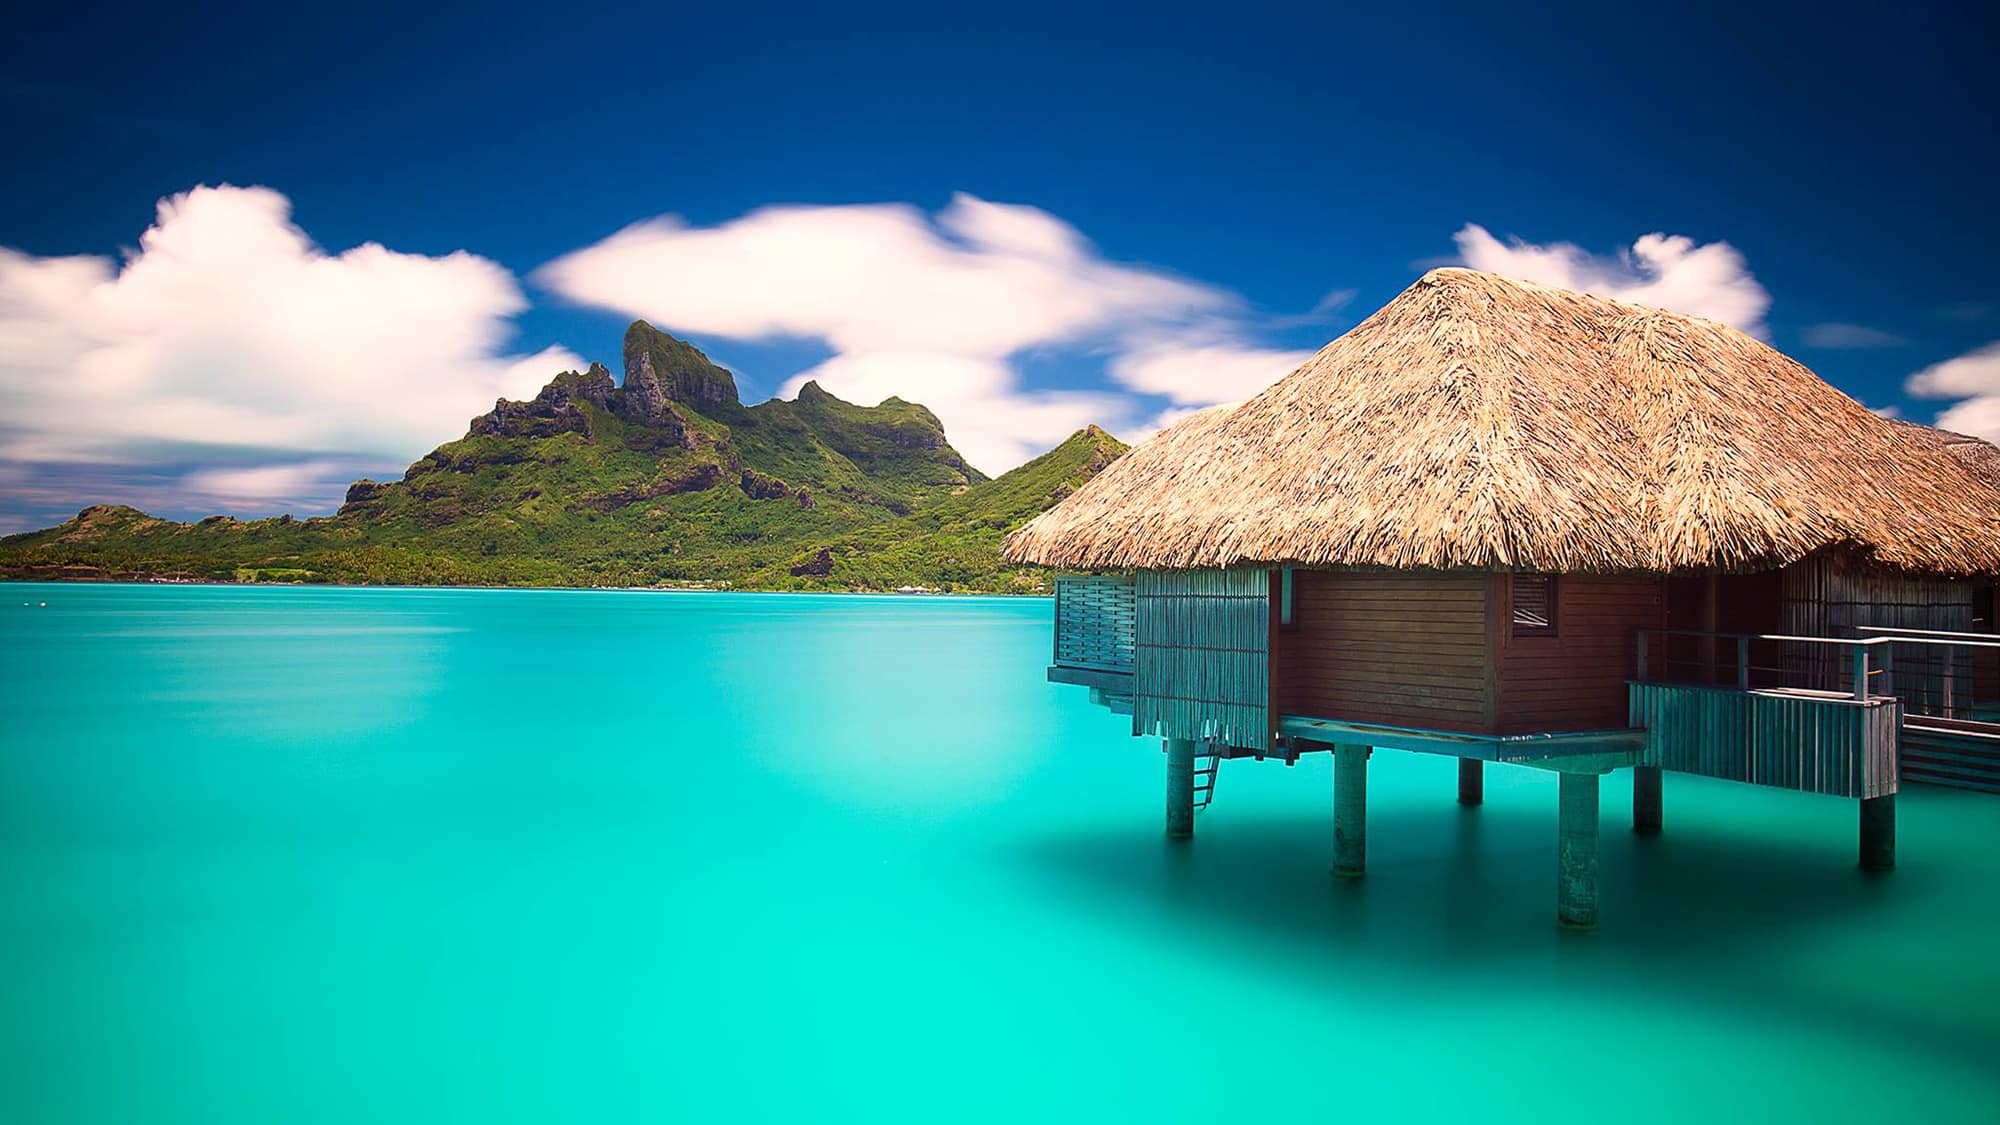 Most Beautiful Islands in the World: Bora Bora, the Islands of Tahiti